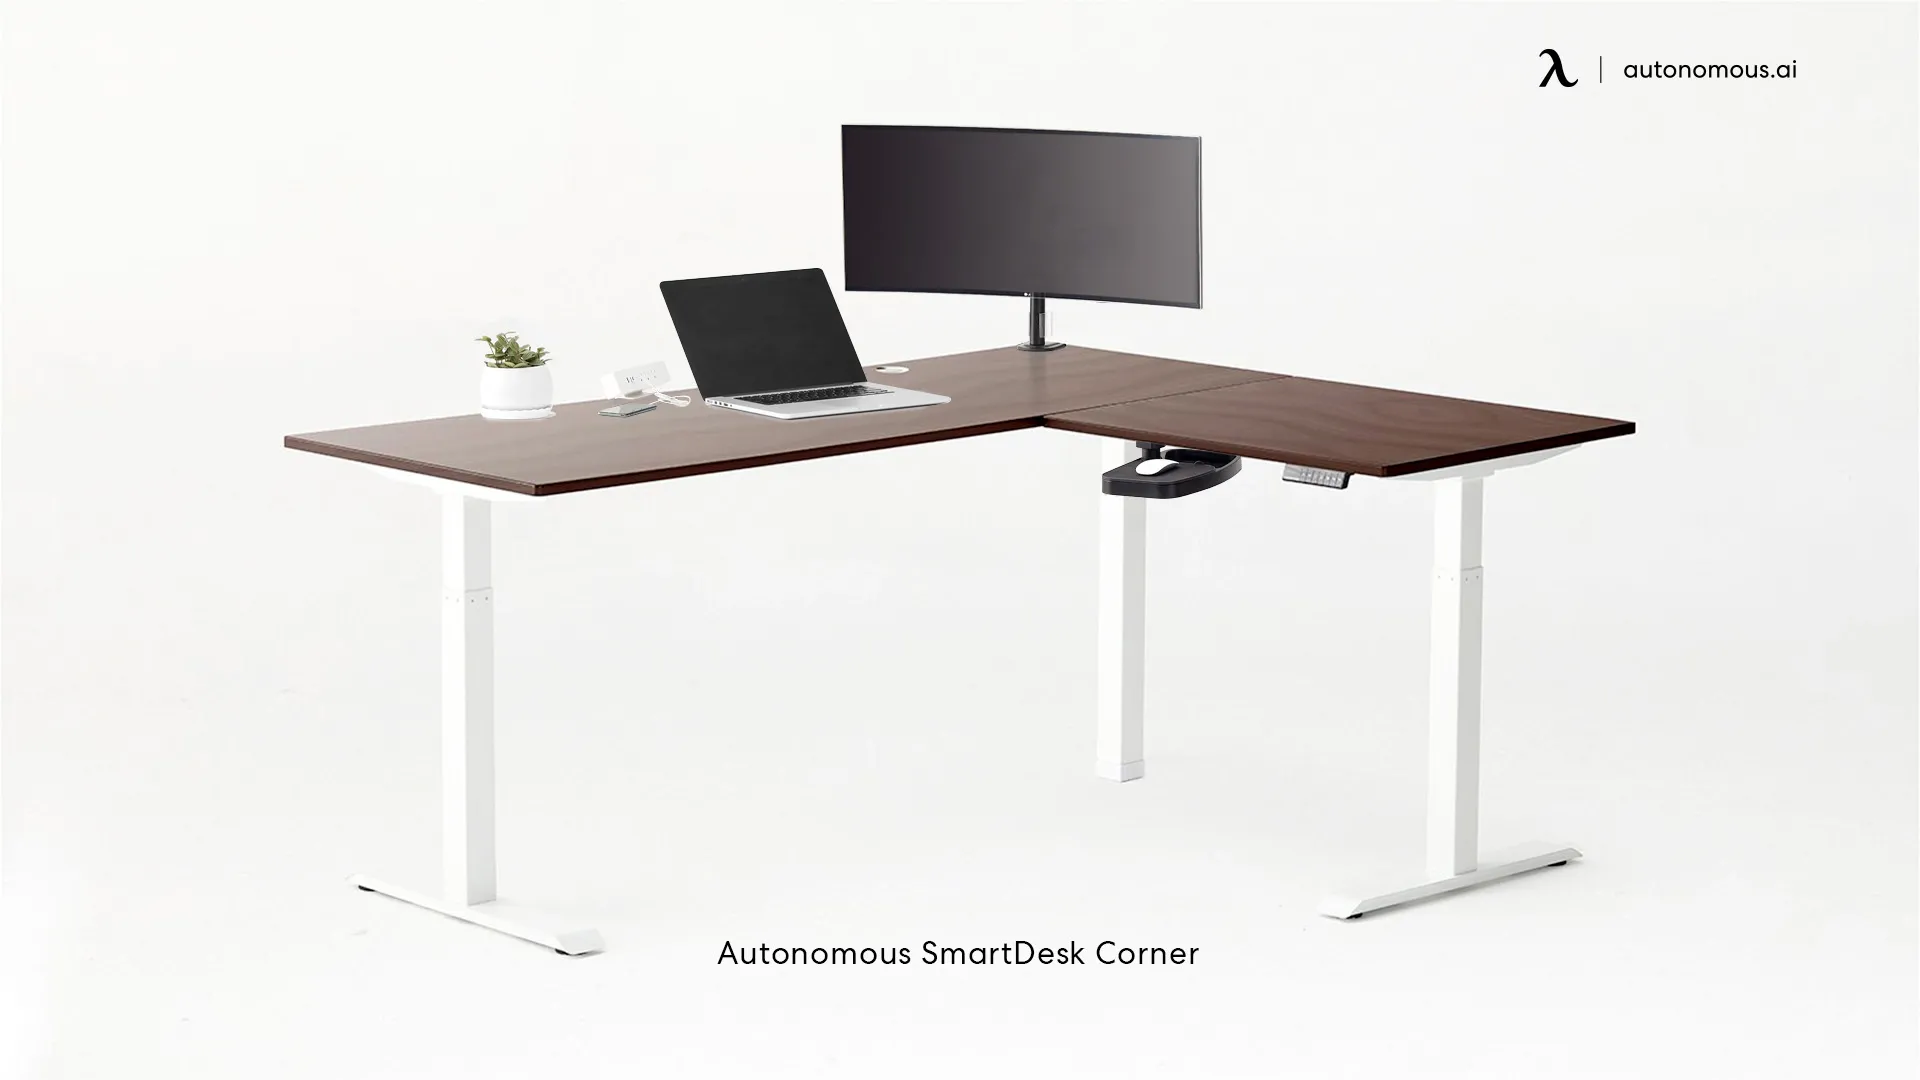 Autonomous SmartDesk Corner labor day desk sales